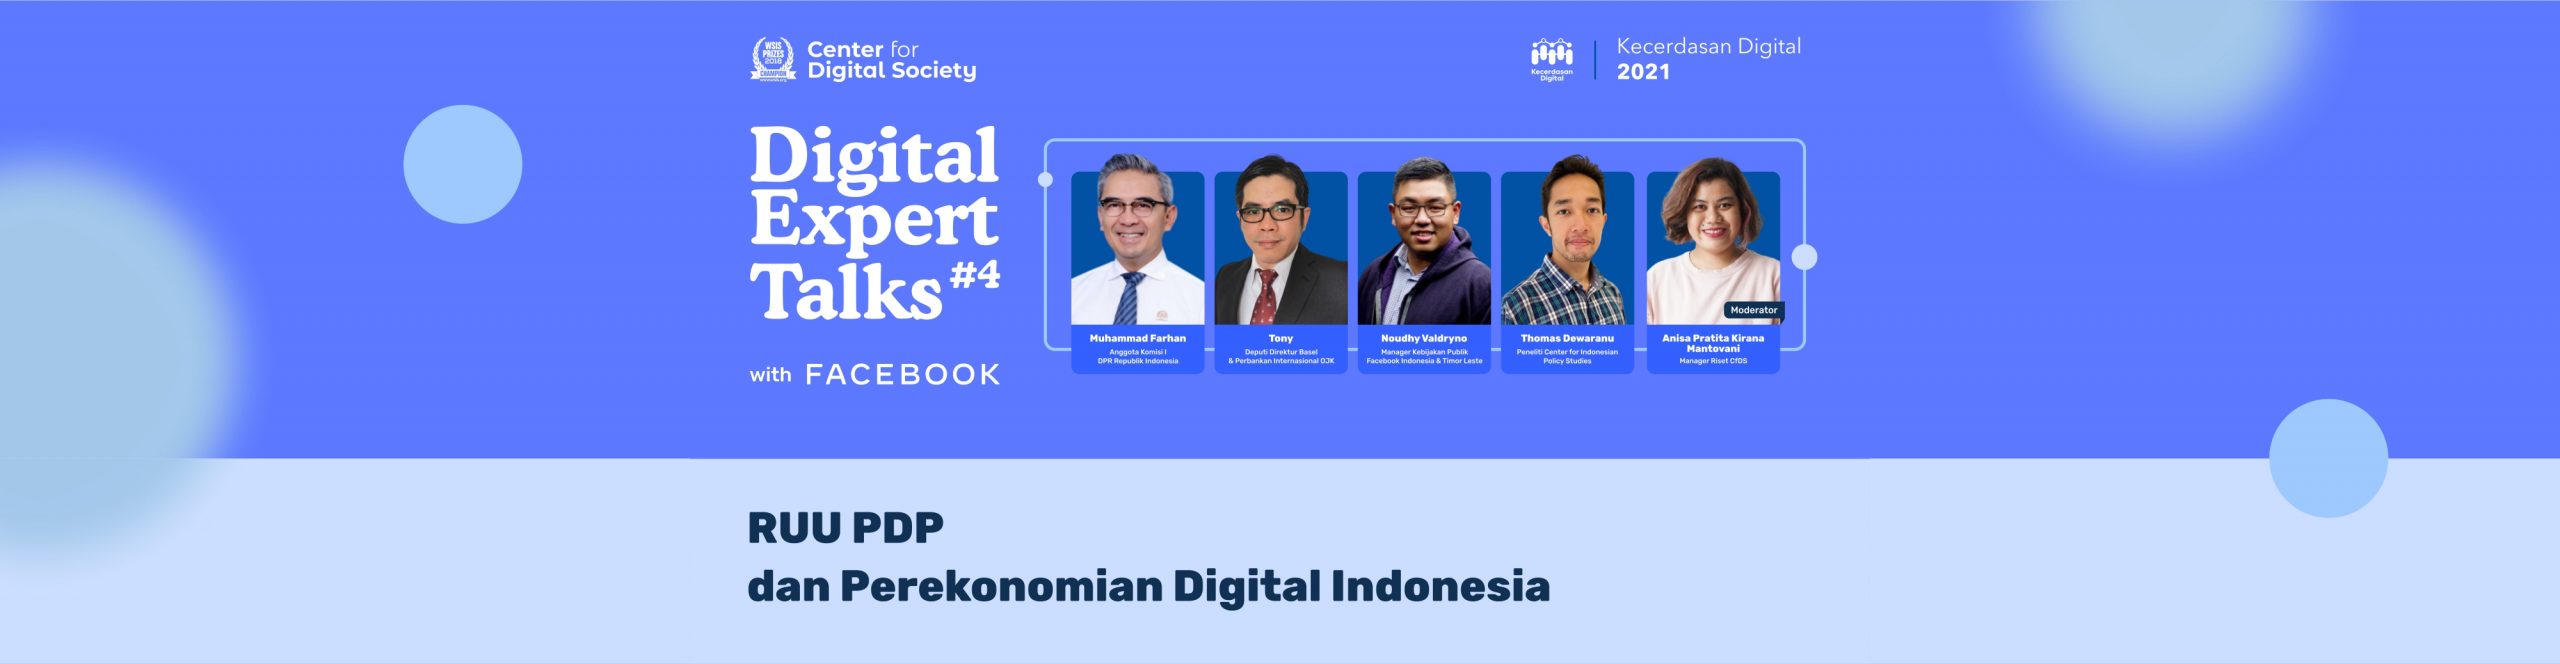 PRESS RELEASE Digital Expert Talks #4 with Facebook Indonesia